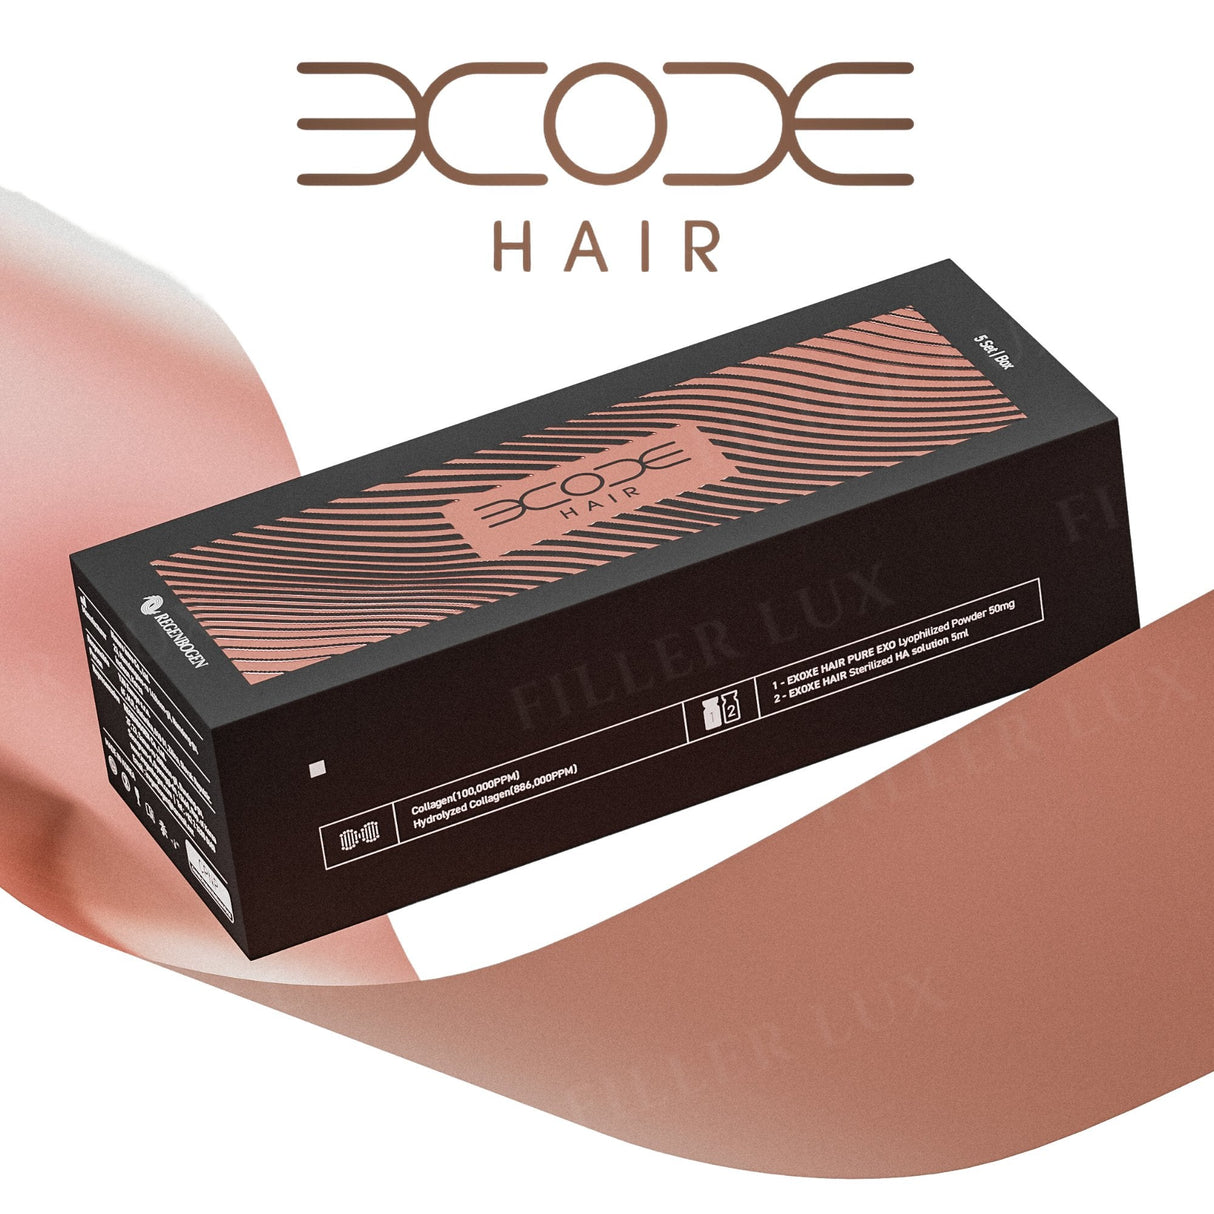 EXOXE Hair - Filler Lux™ - Mesotherapy - Regenbogen Co., Ltd.